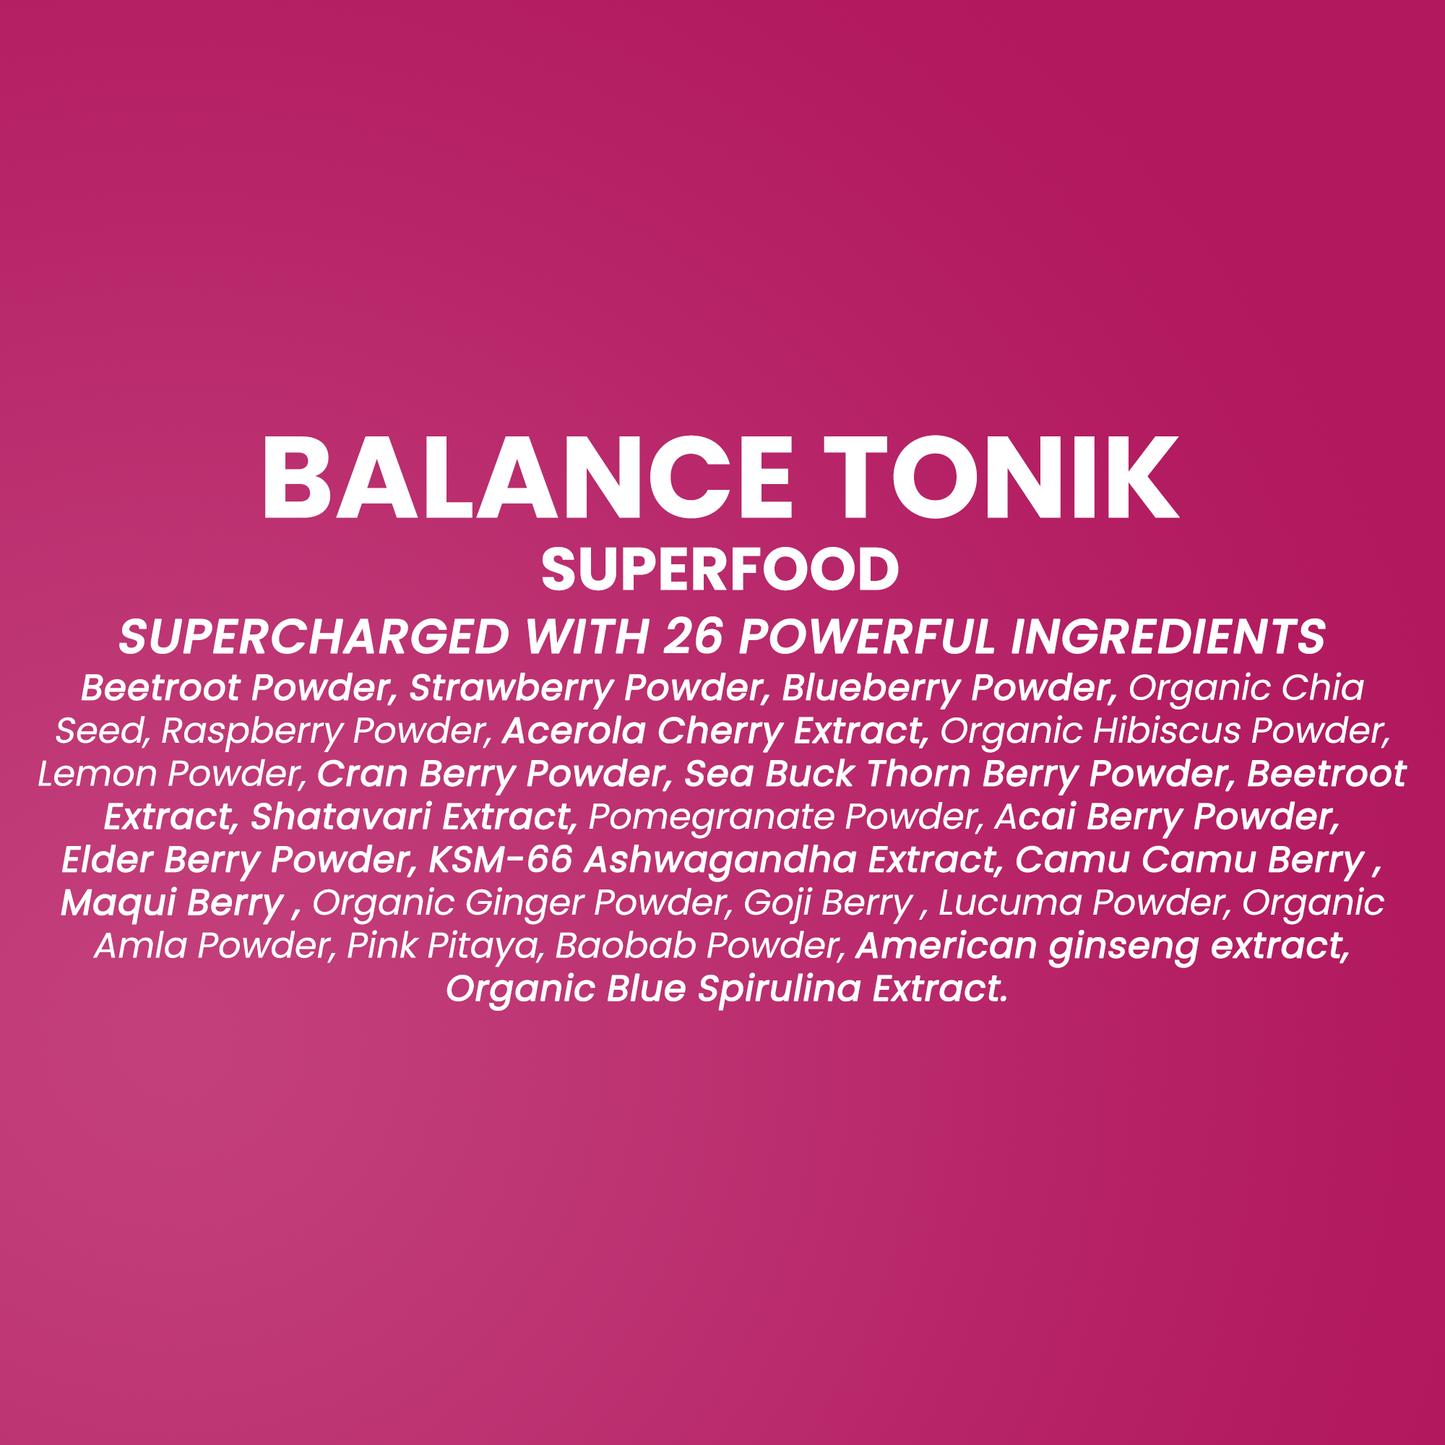 Balance Tonik Superfood | Hormonal Balance Blend With 26 Powerful Superfood.